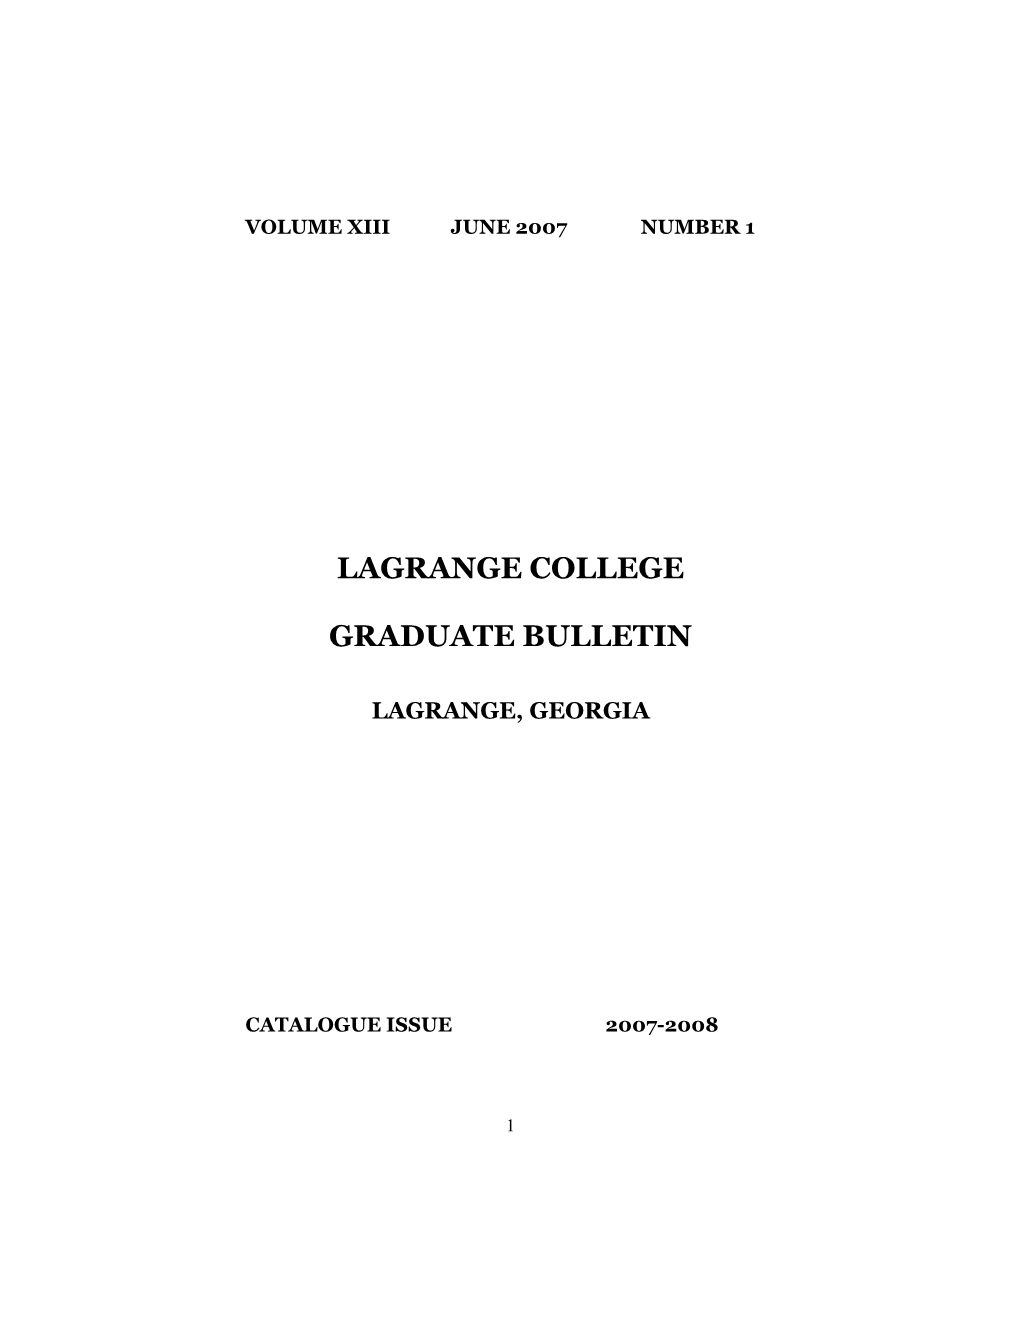 Lagrange College Graduate Bulletin, Volume XIII, Number 1